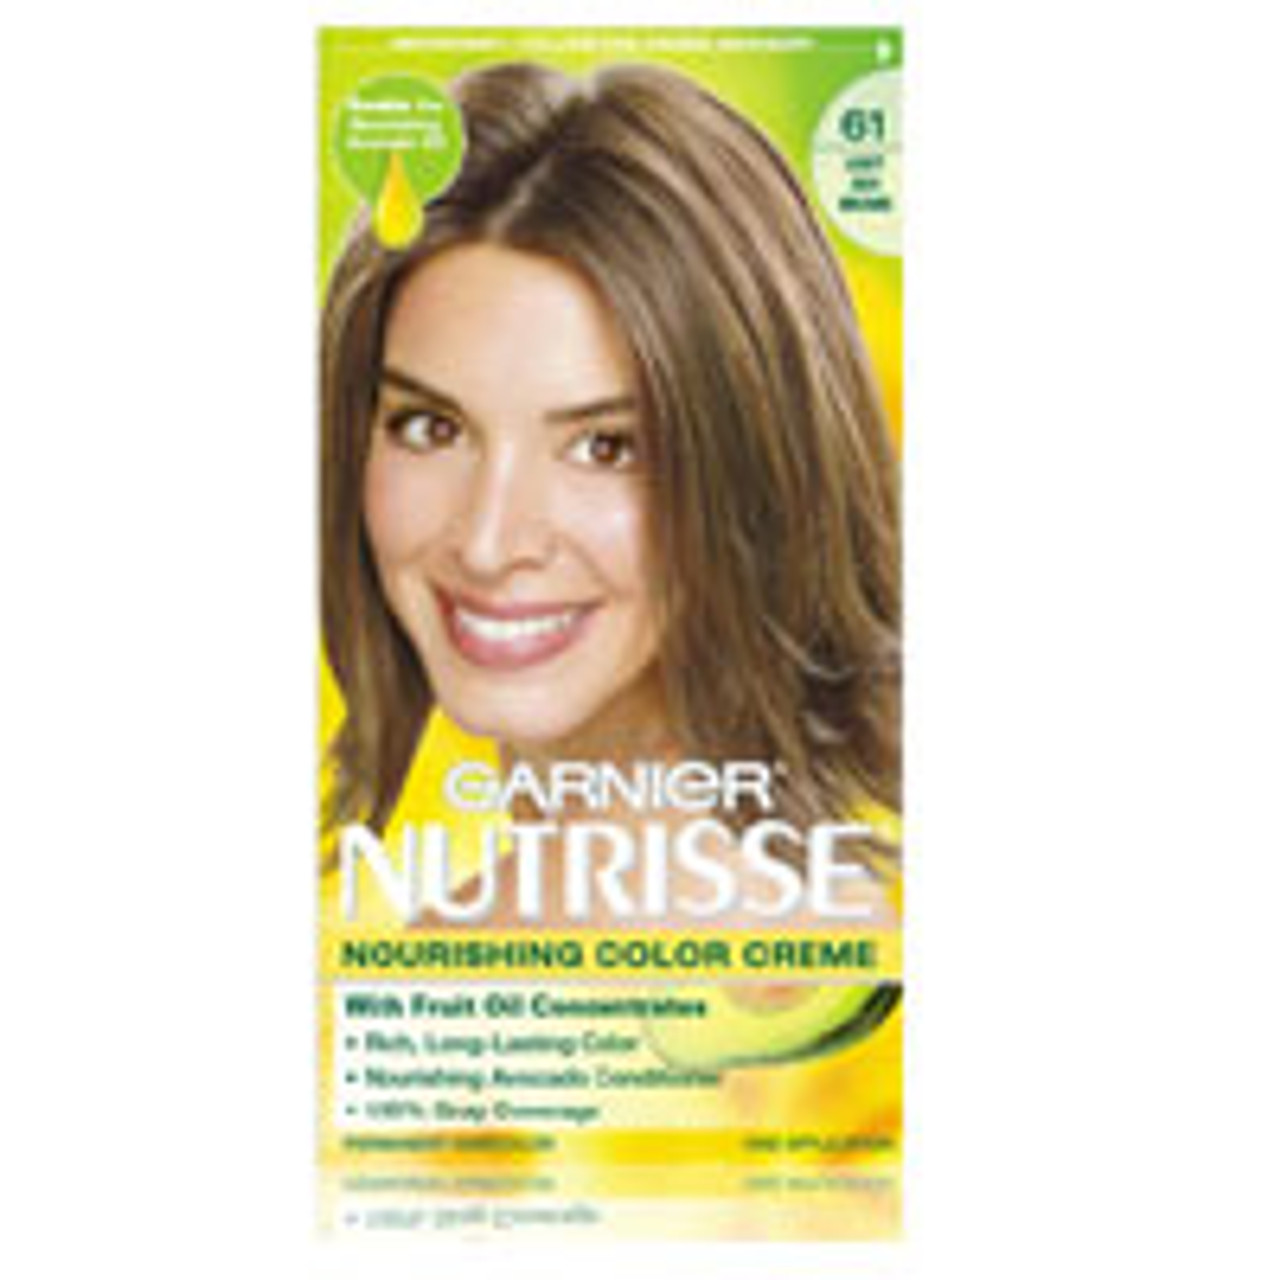 Nutrisse Ultra Crème - Light Ash Brown Hair Dye - Garnier